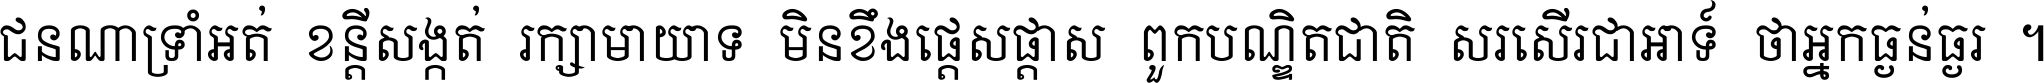 Khmer Mondulkiri A narrow